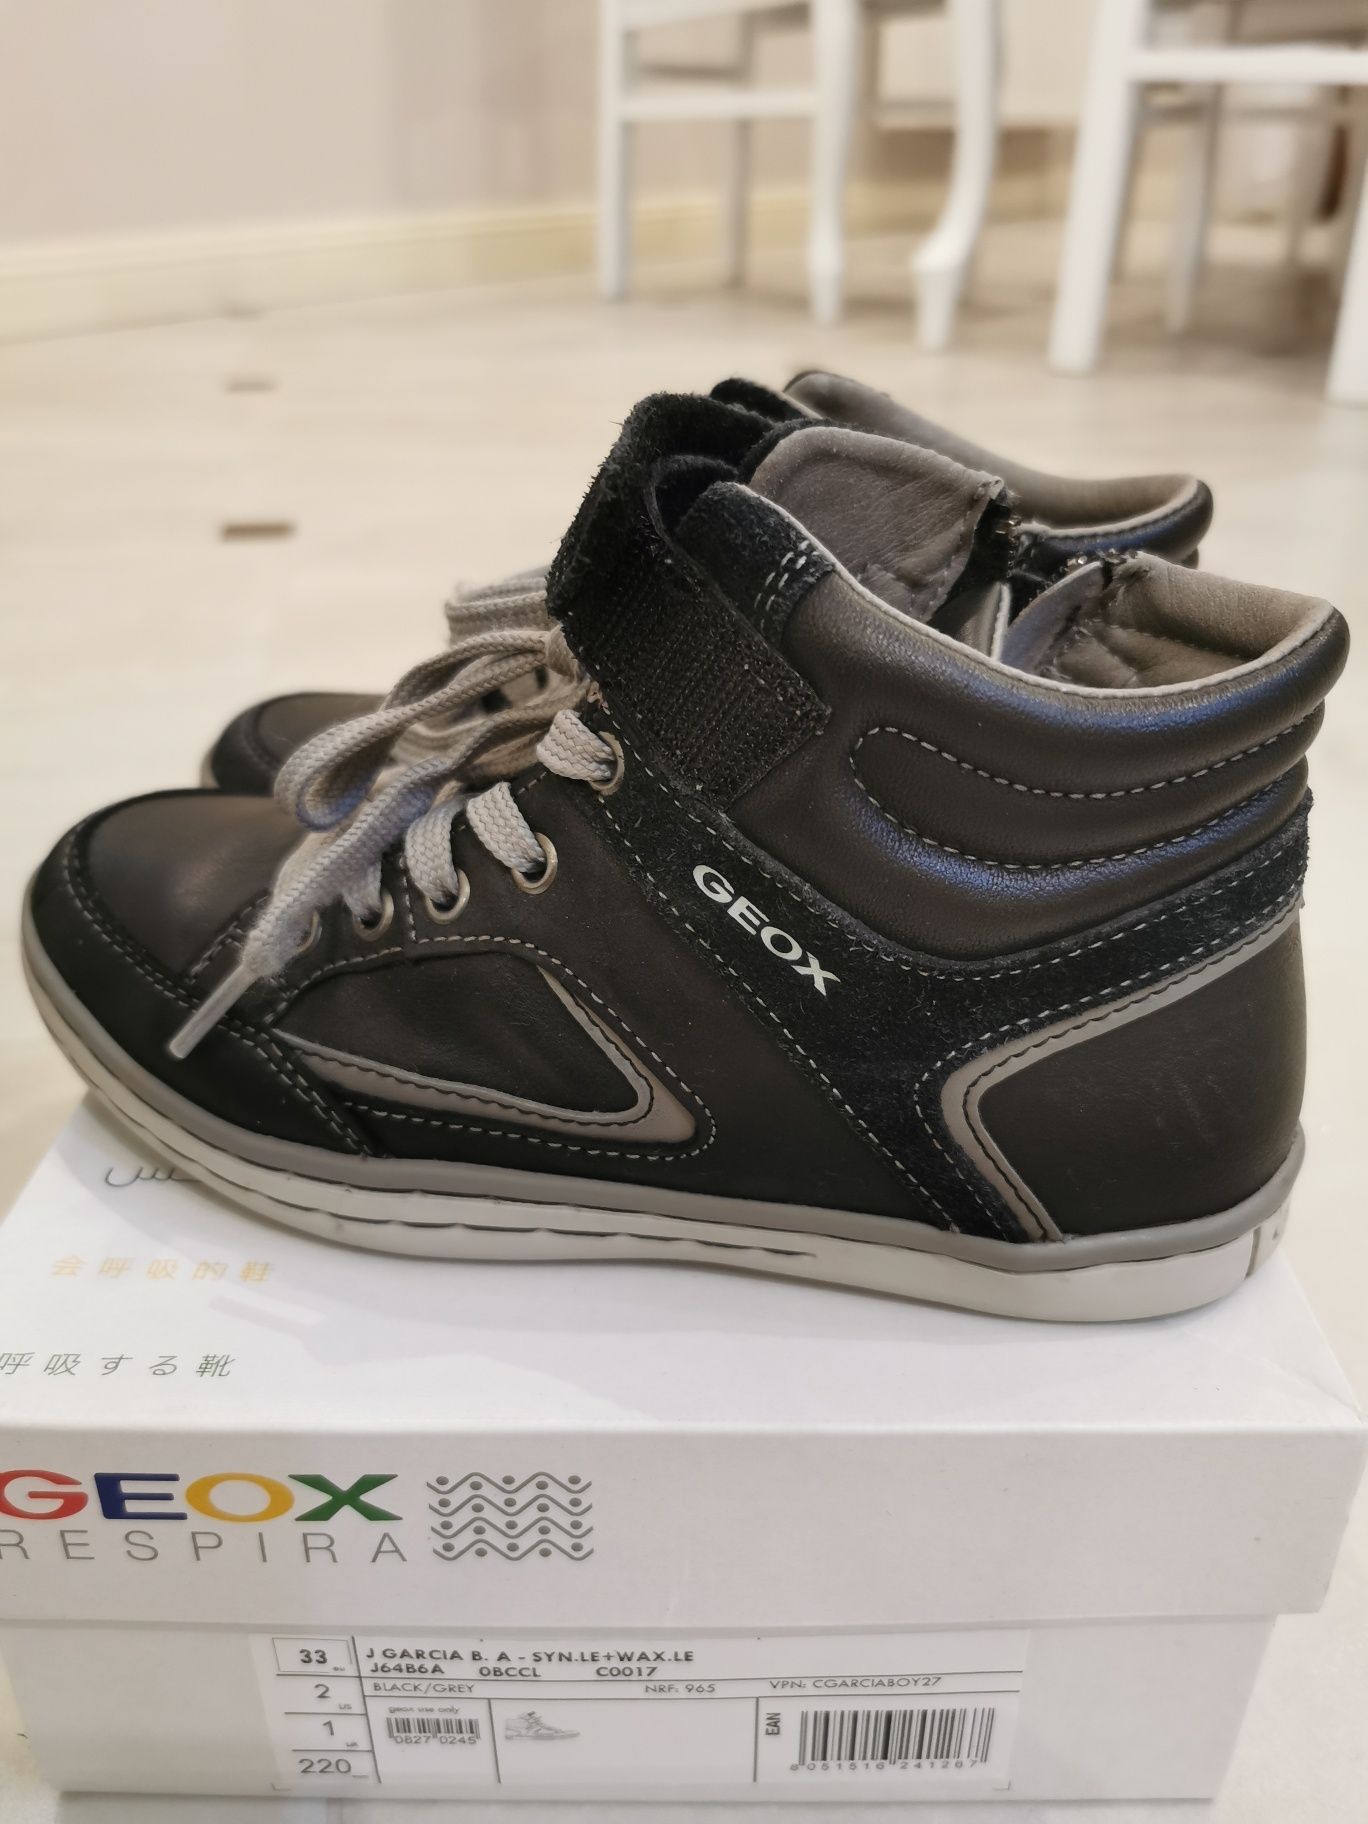 Sneakersy Trzewiki Geox Respira 33 dł. 21,5 cm gratis buty pepperts